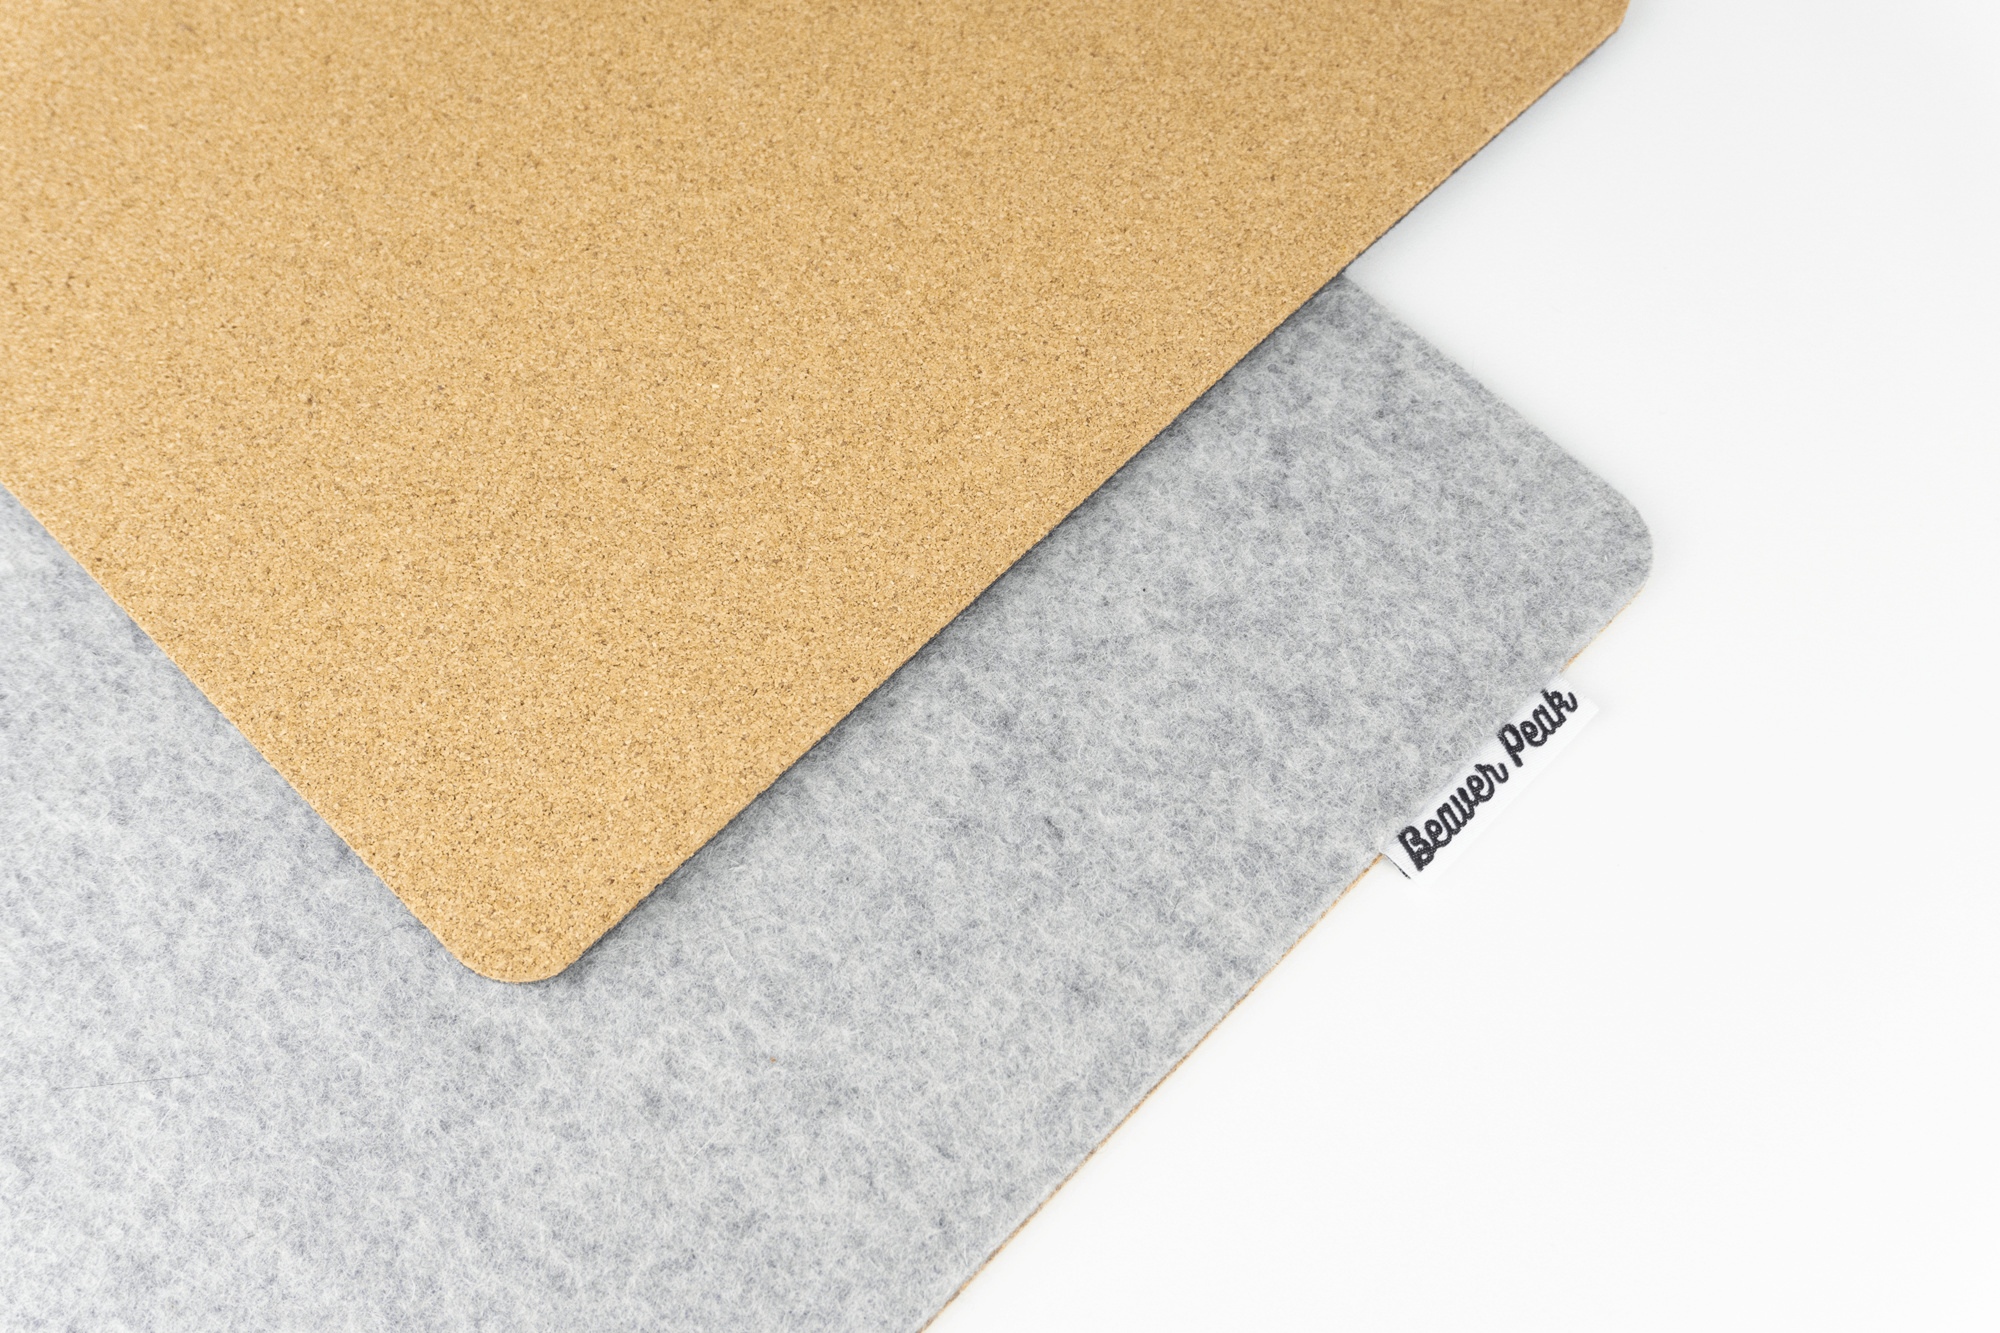 Merino wool desk mat with cork anti-slip bottom layer being shown.